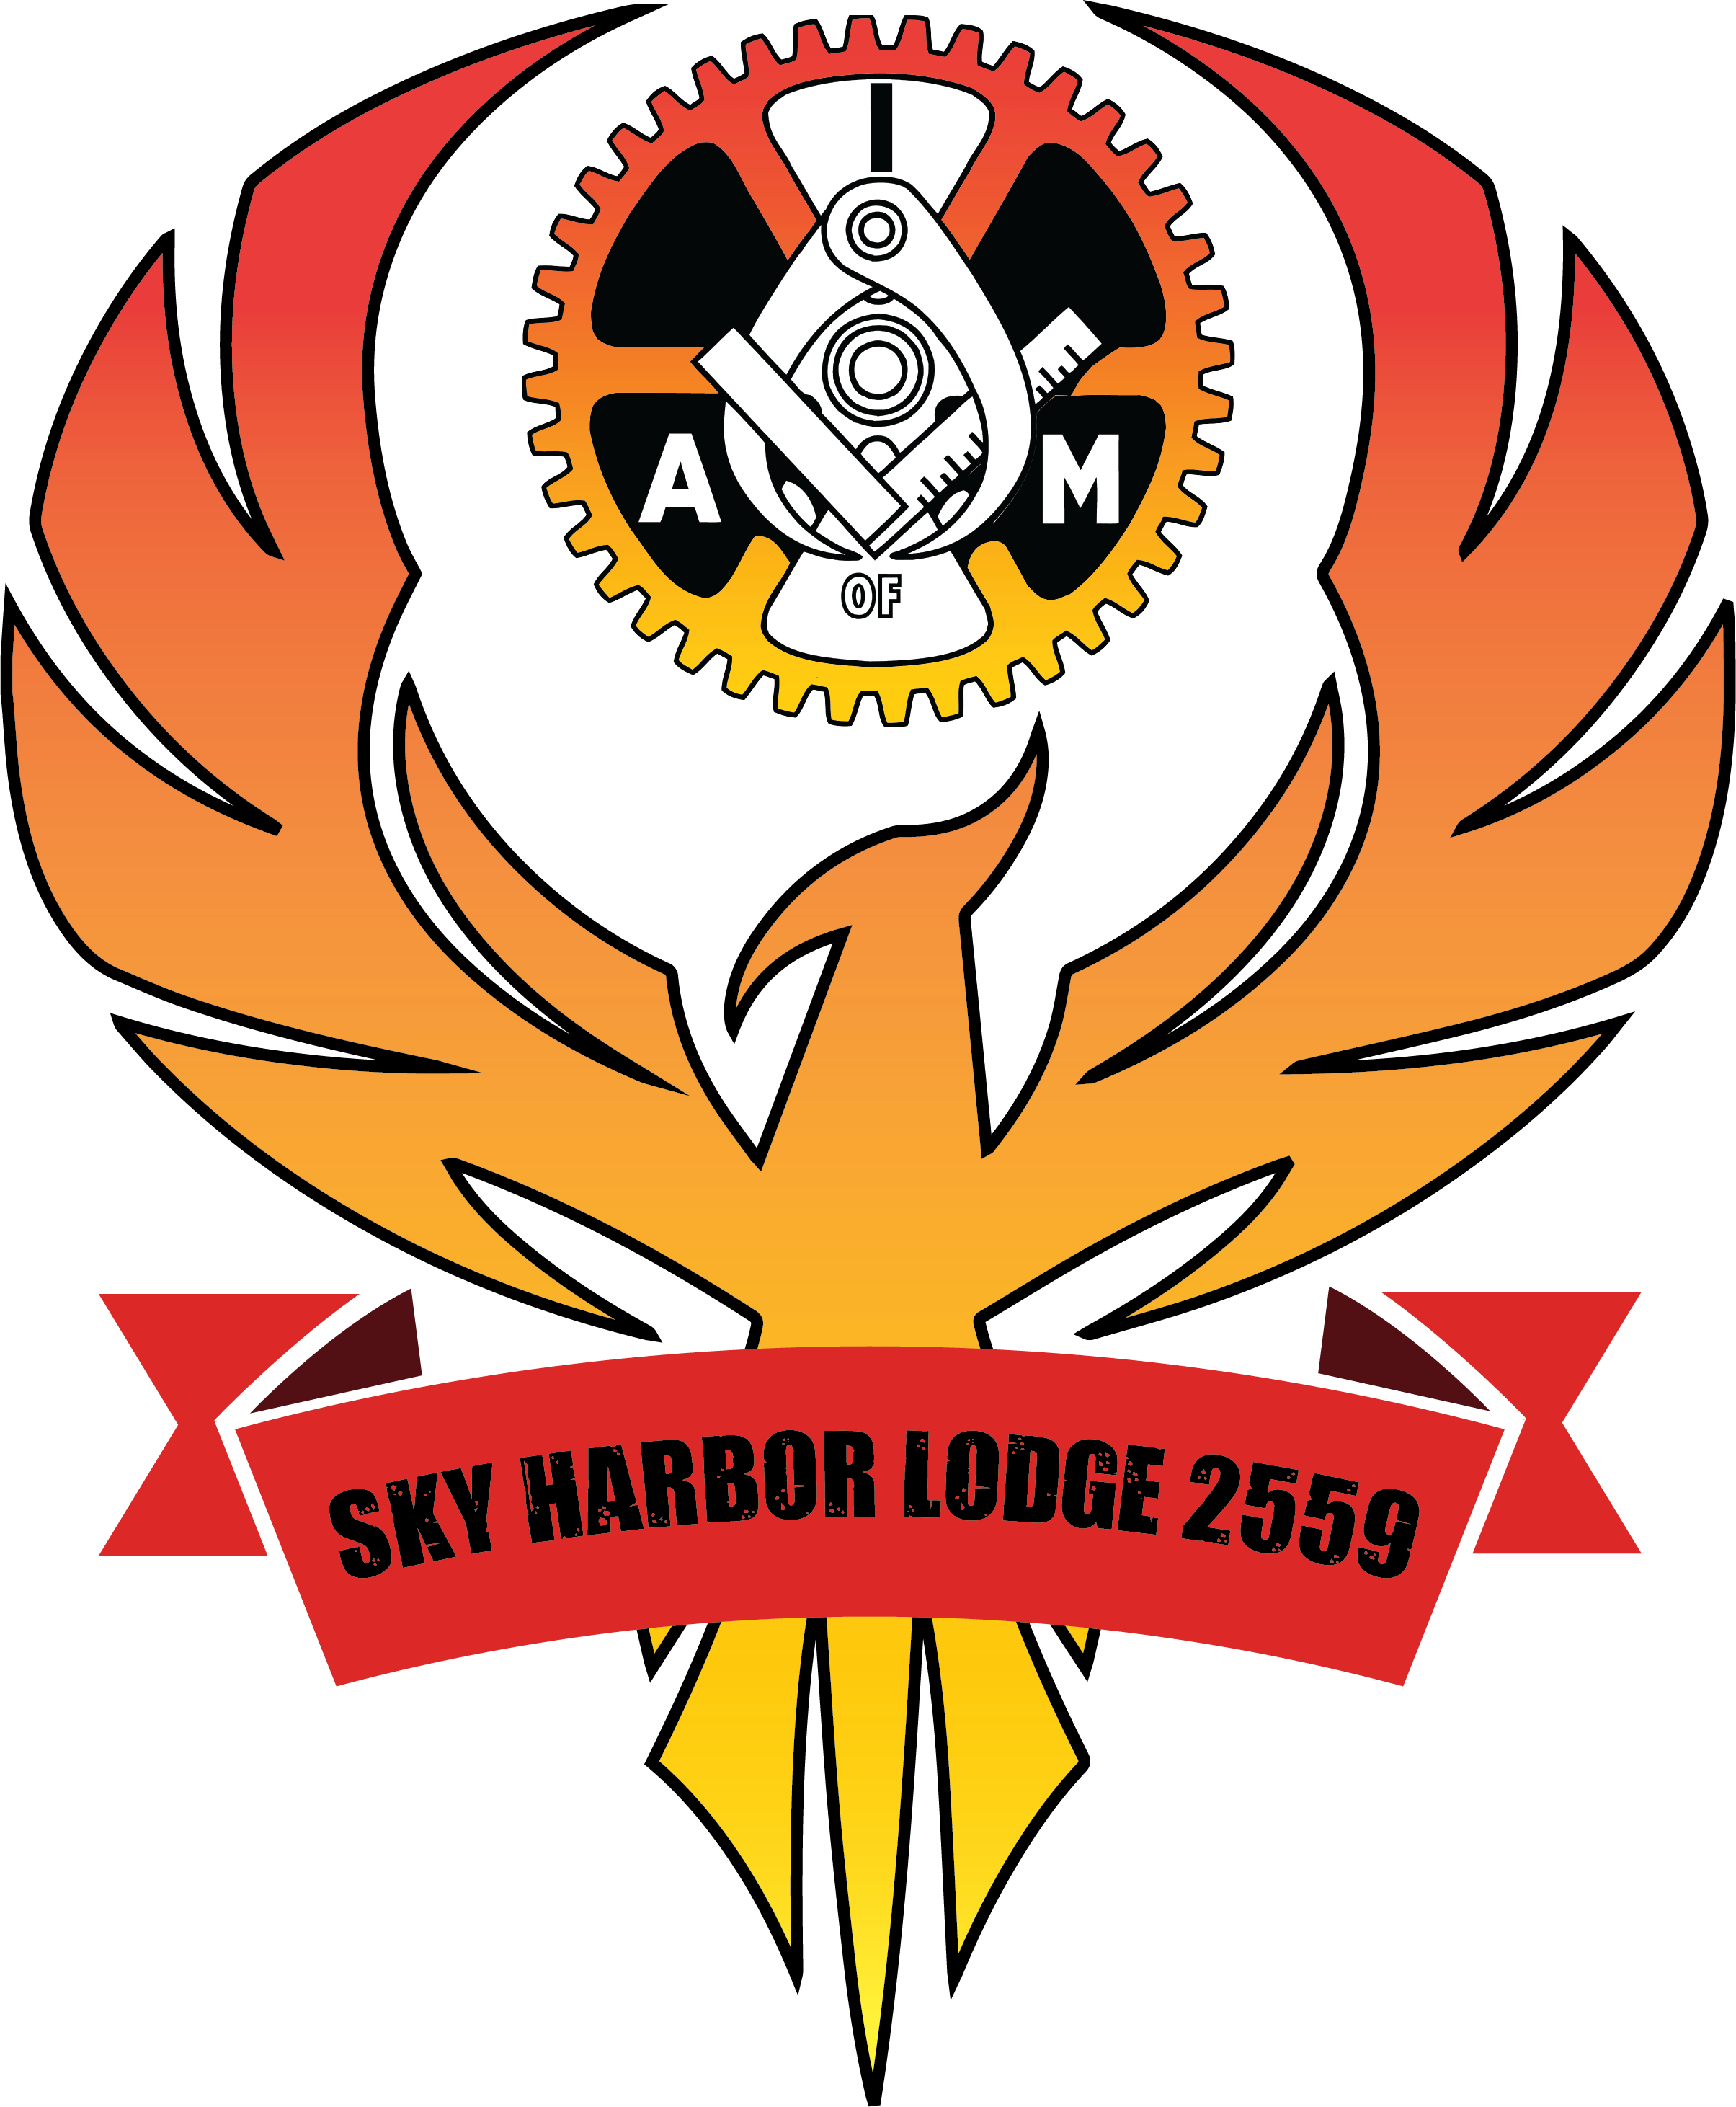 Sky Harbor Lodge 2559